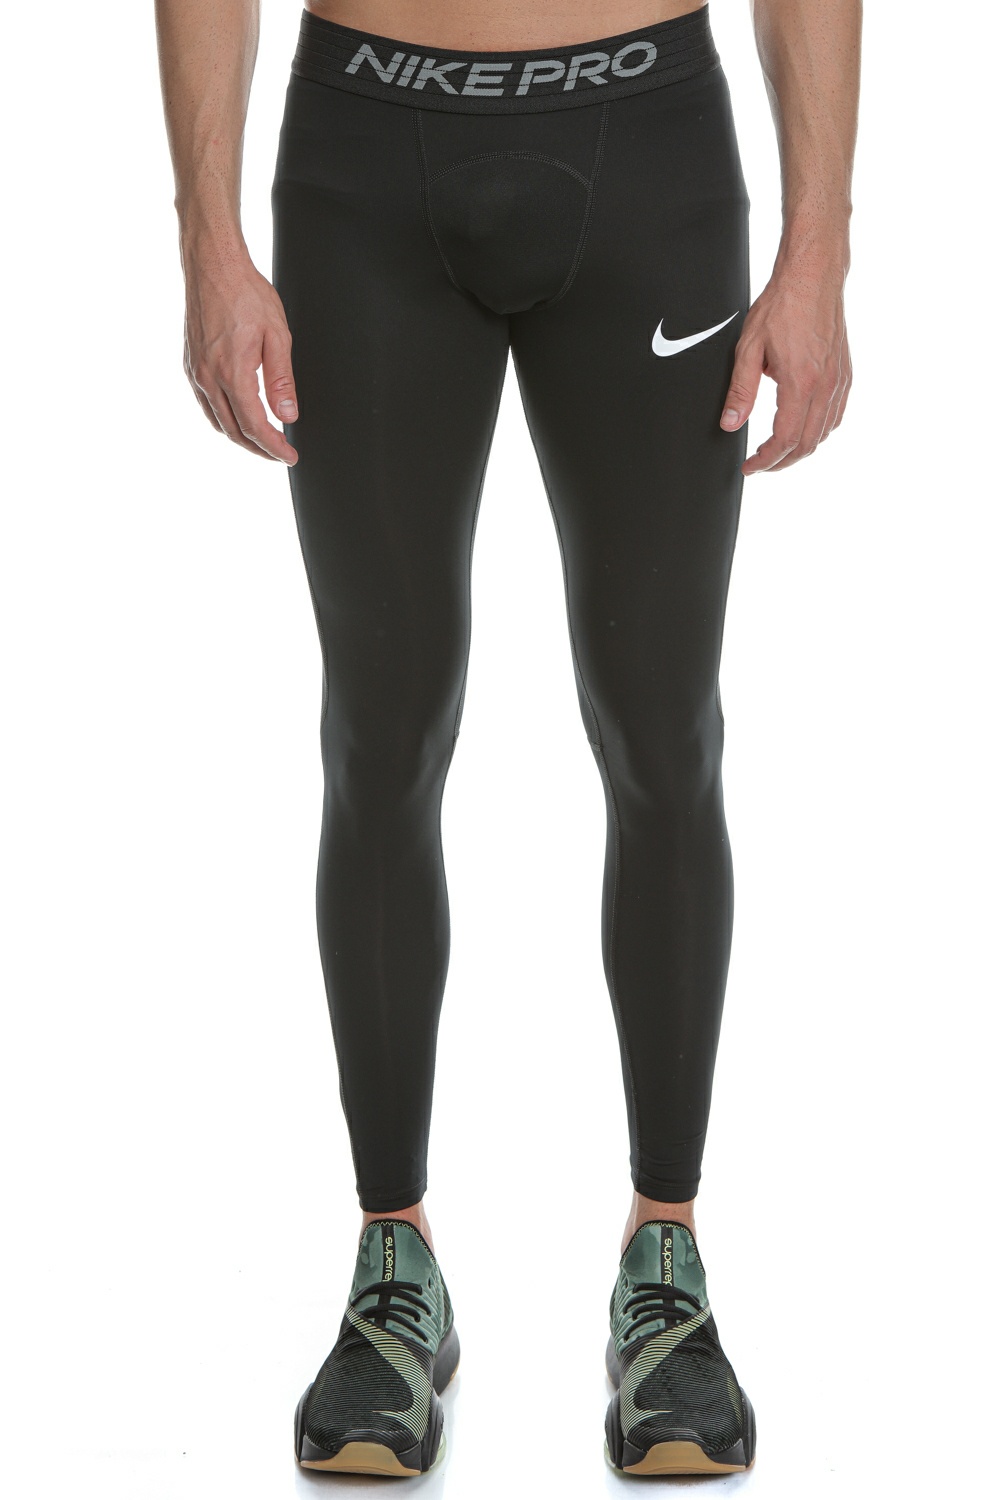 NIKE - Ανδρικό κολάν Nike Pro μαύρο Ανδρικά/Ρούχα/Αθλητικά/Κολάν